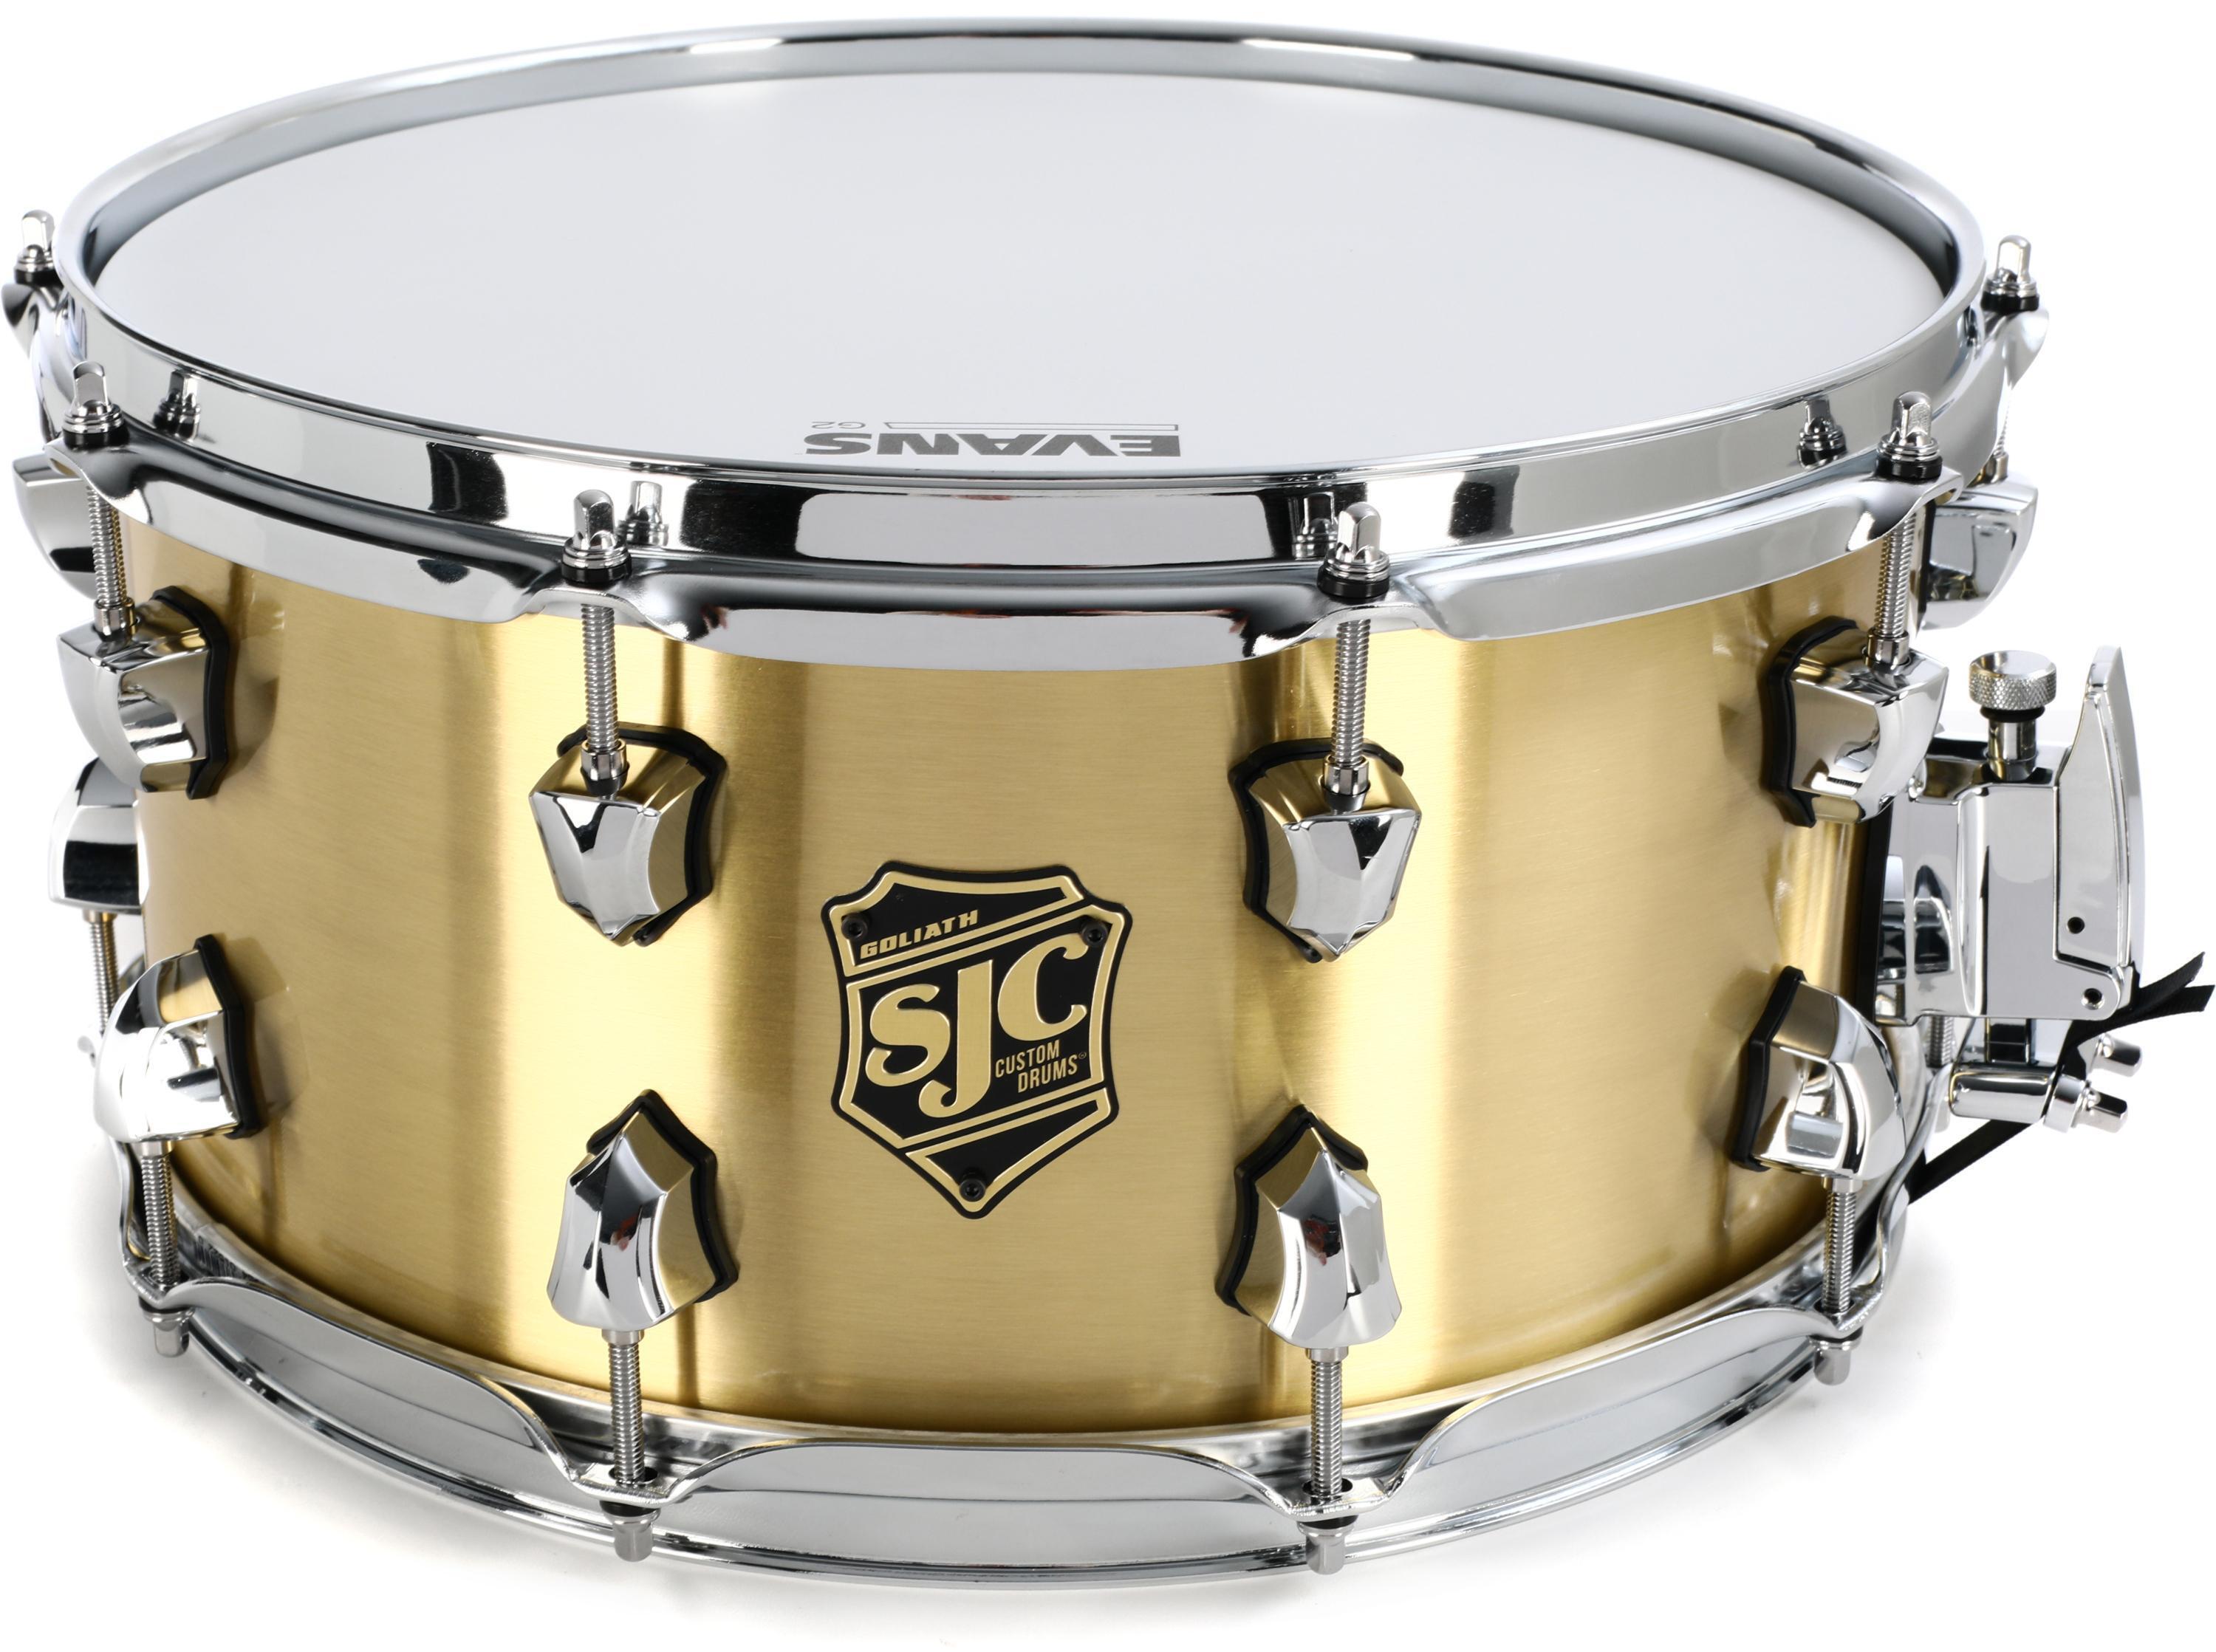 SJC Custom Drums Goliath Brass Snare Drum - 7 x 14 inch - Brushed ...